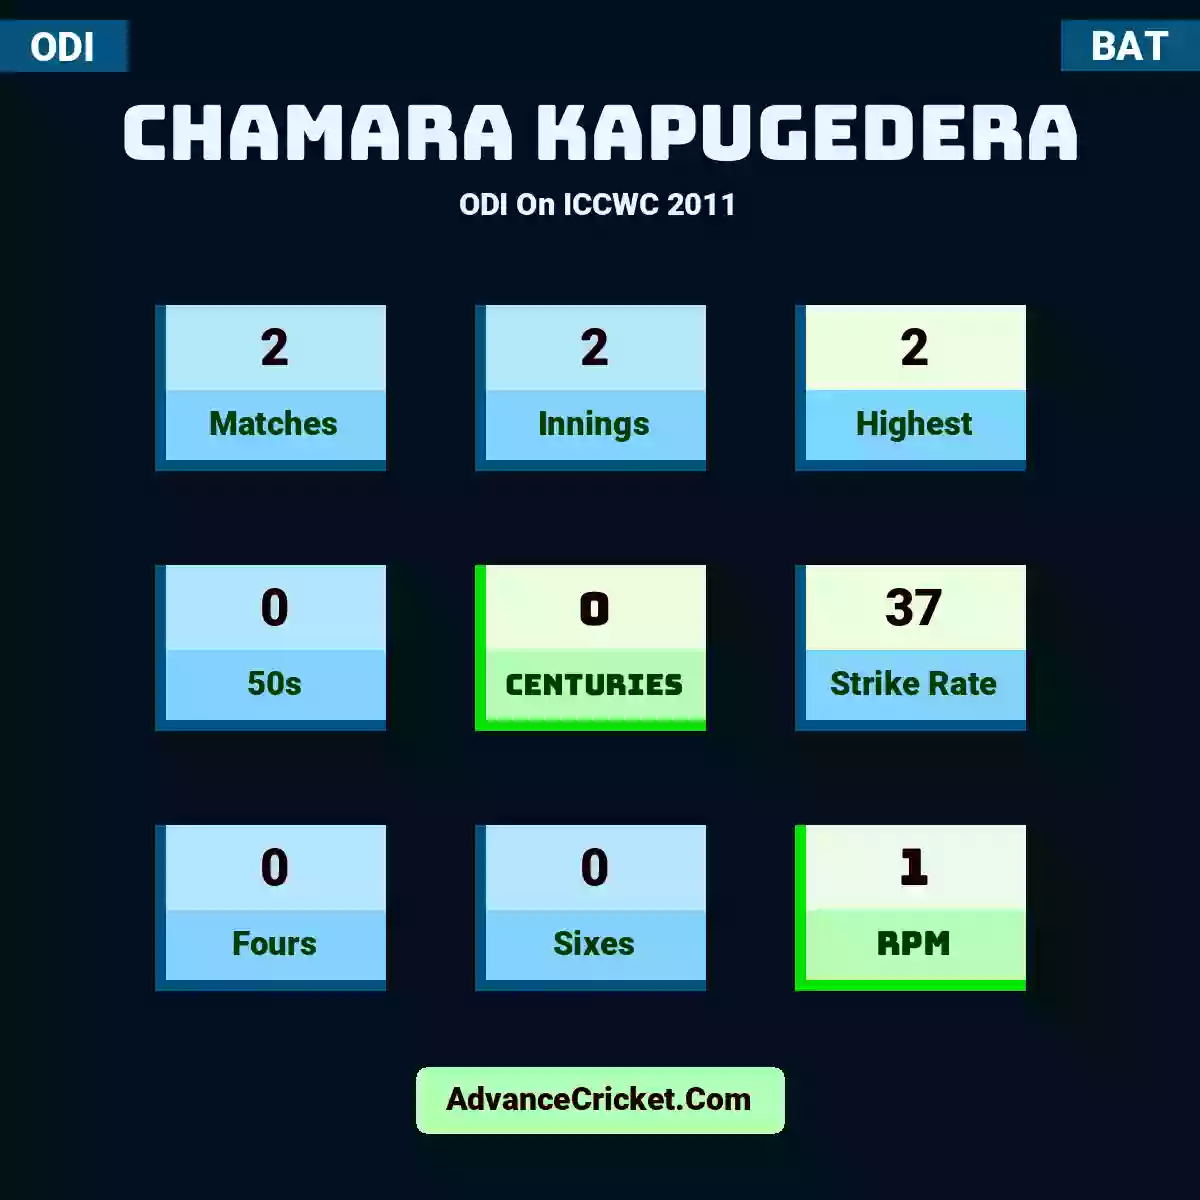 Chamara Kapugedera ODI  On ICCWC 2011, Chamara Kapugedera played 2 matches, scored 2 runs as highest, 0 half-centuries, and 0 centuries, with a strike rate of 37. C.Kapugedera hit 0 fours and 0 sixes, with an RPM of 1.